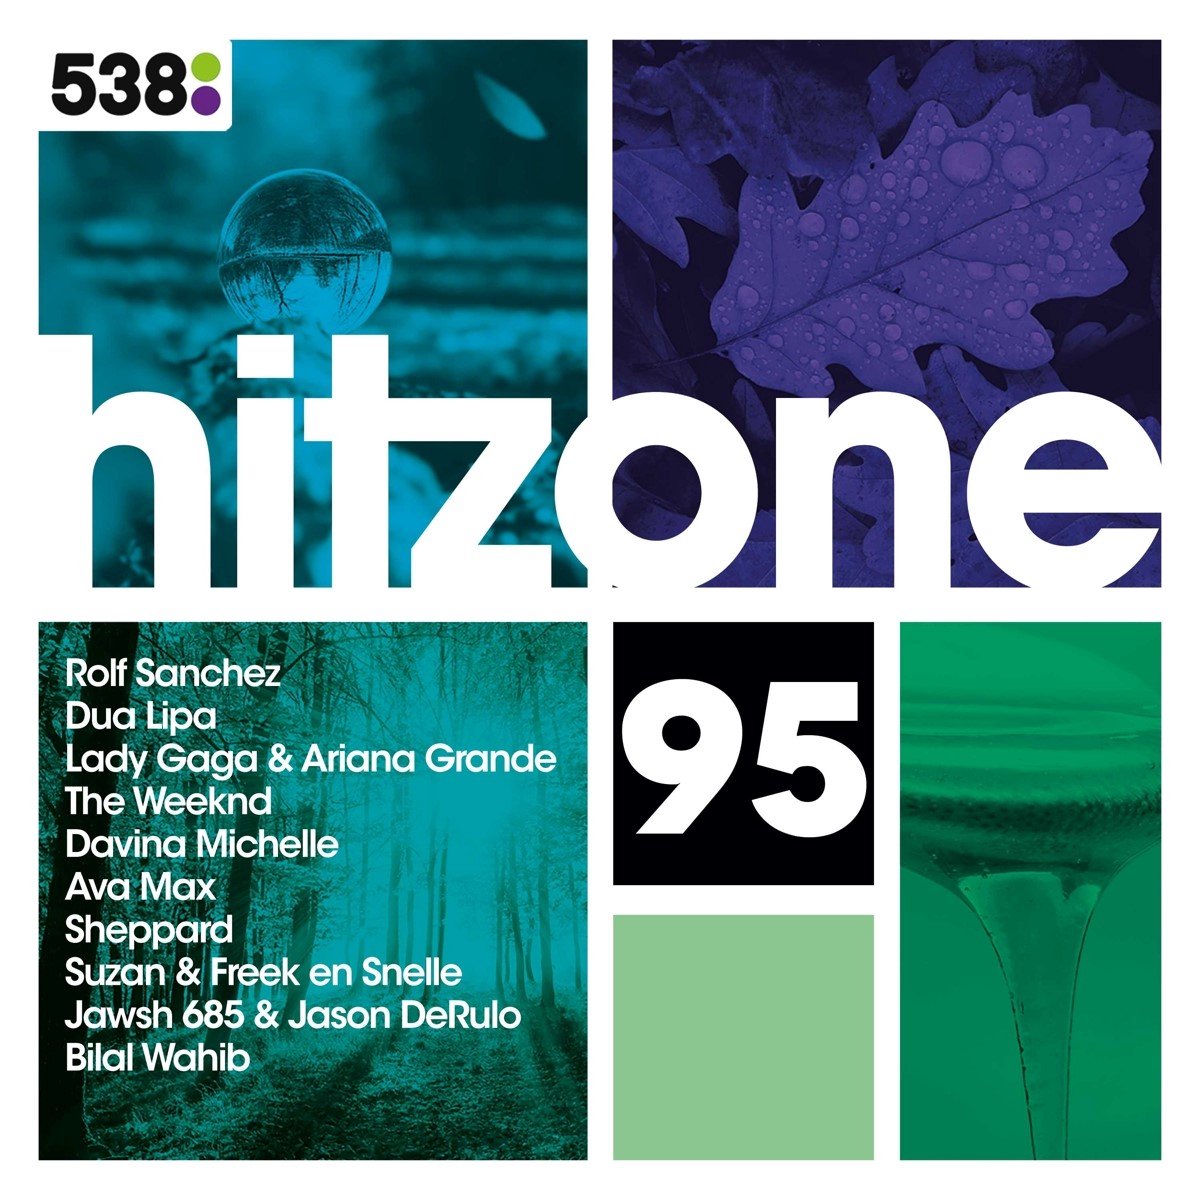 Various Artists - 538 Hitzone 95 (CD) - Hitzone